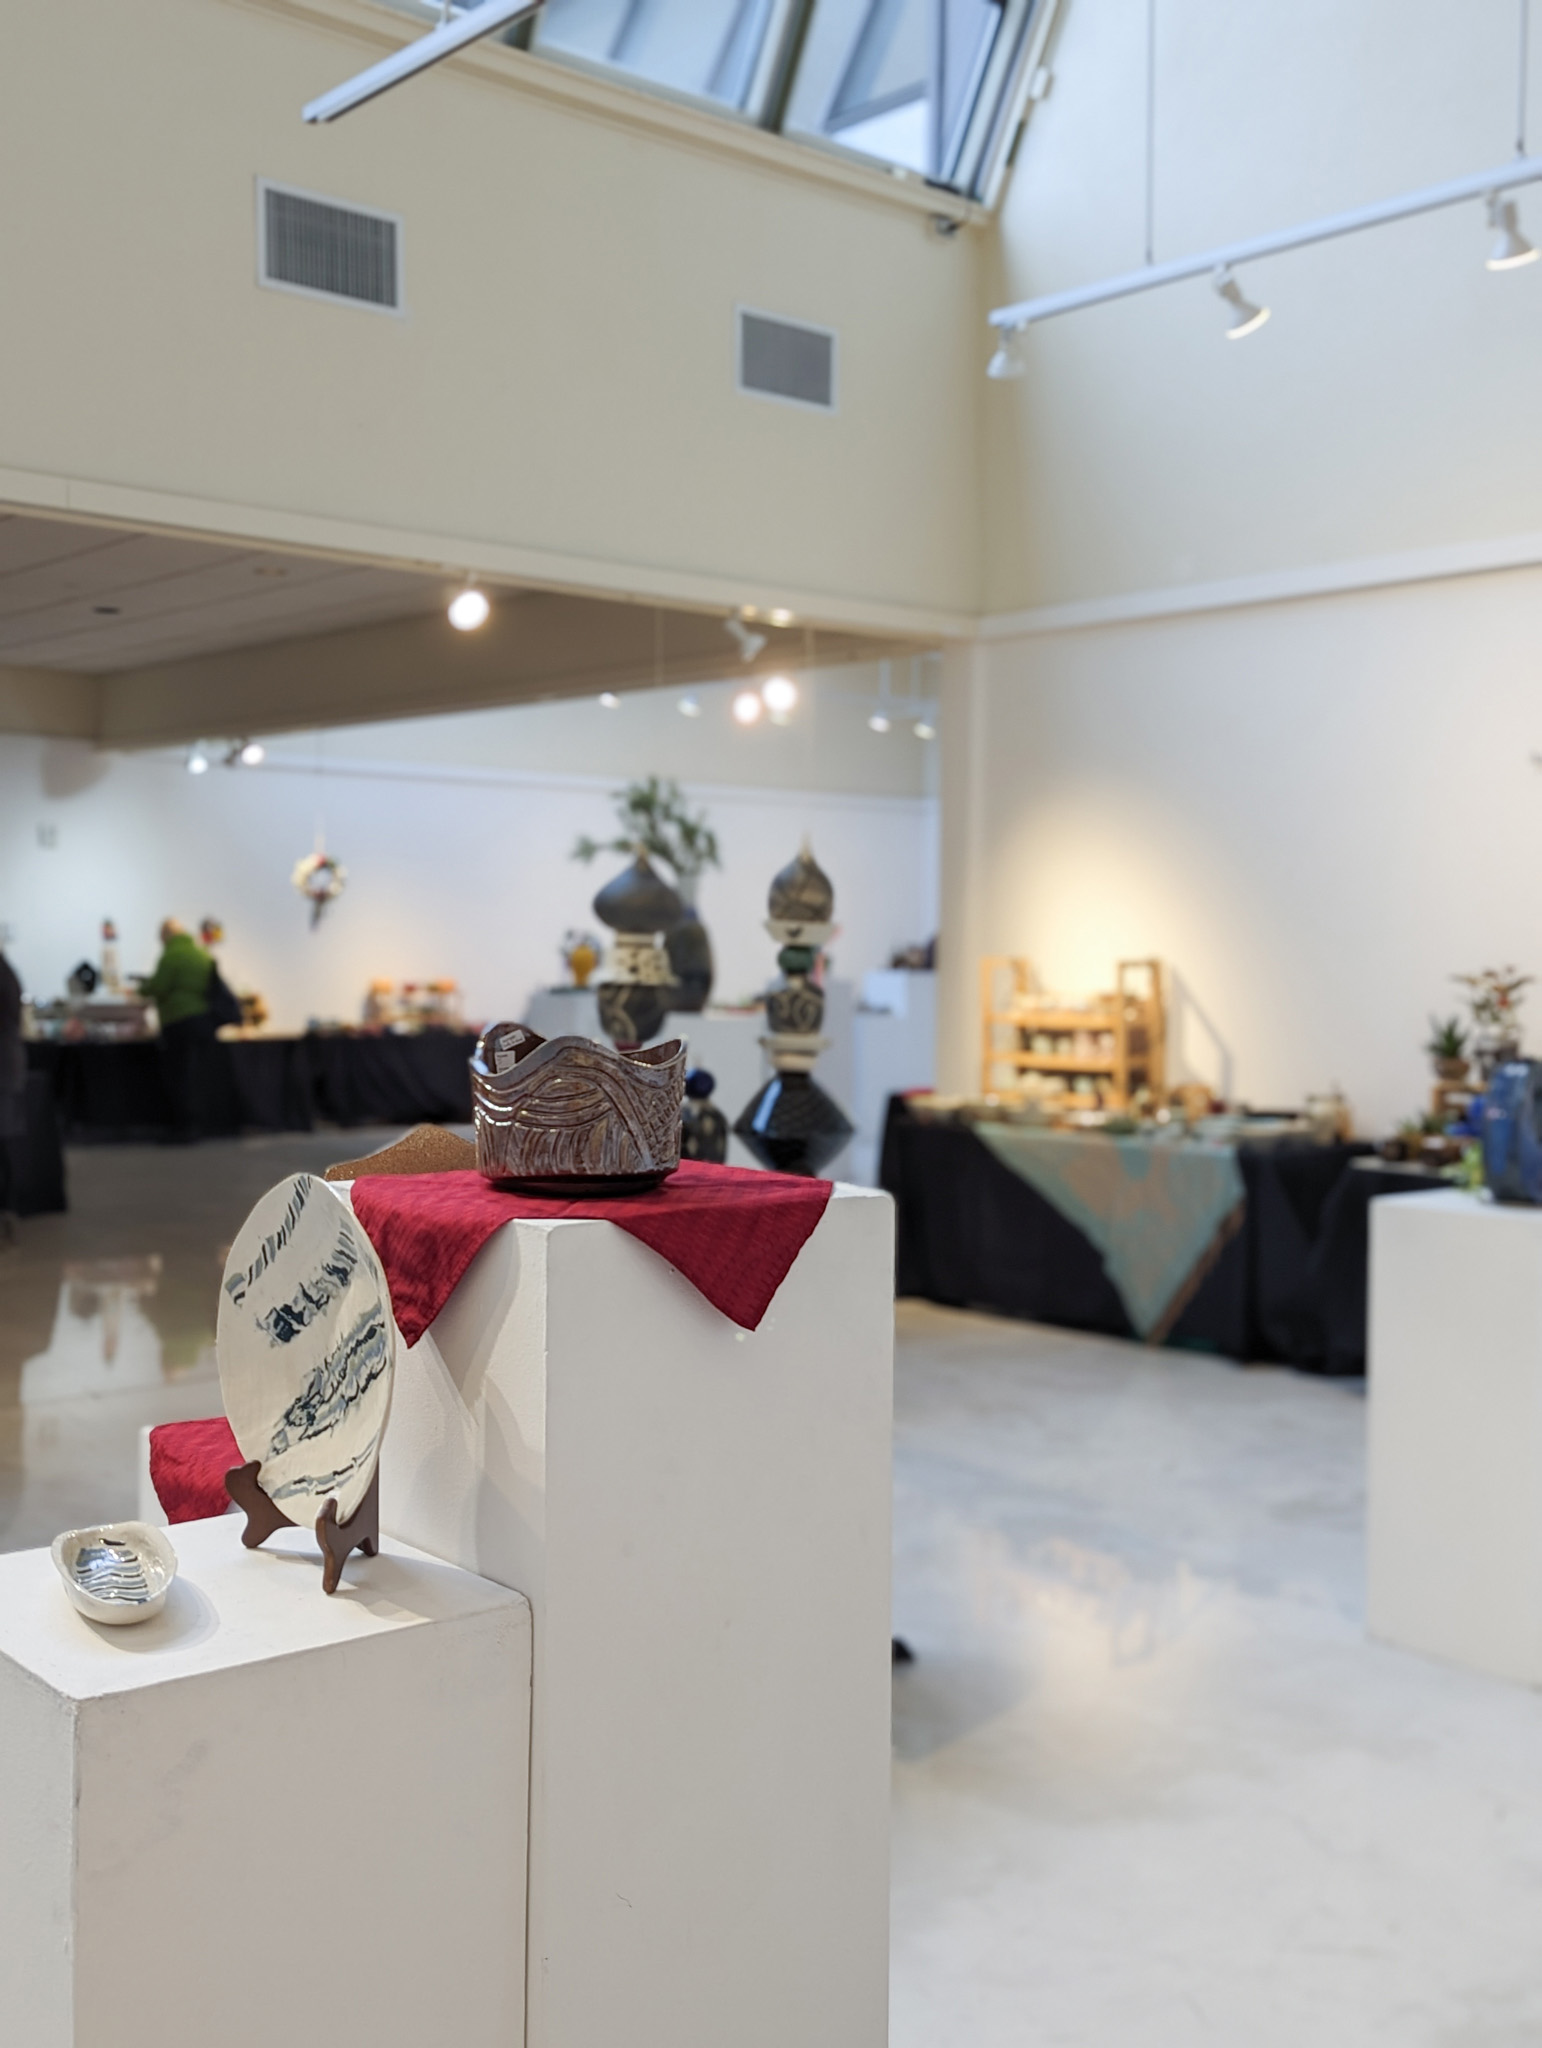 Ceramics sale at art gallery